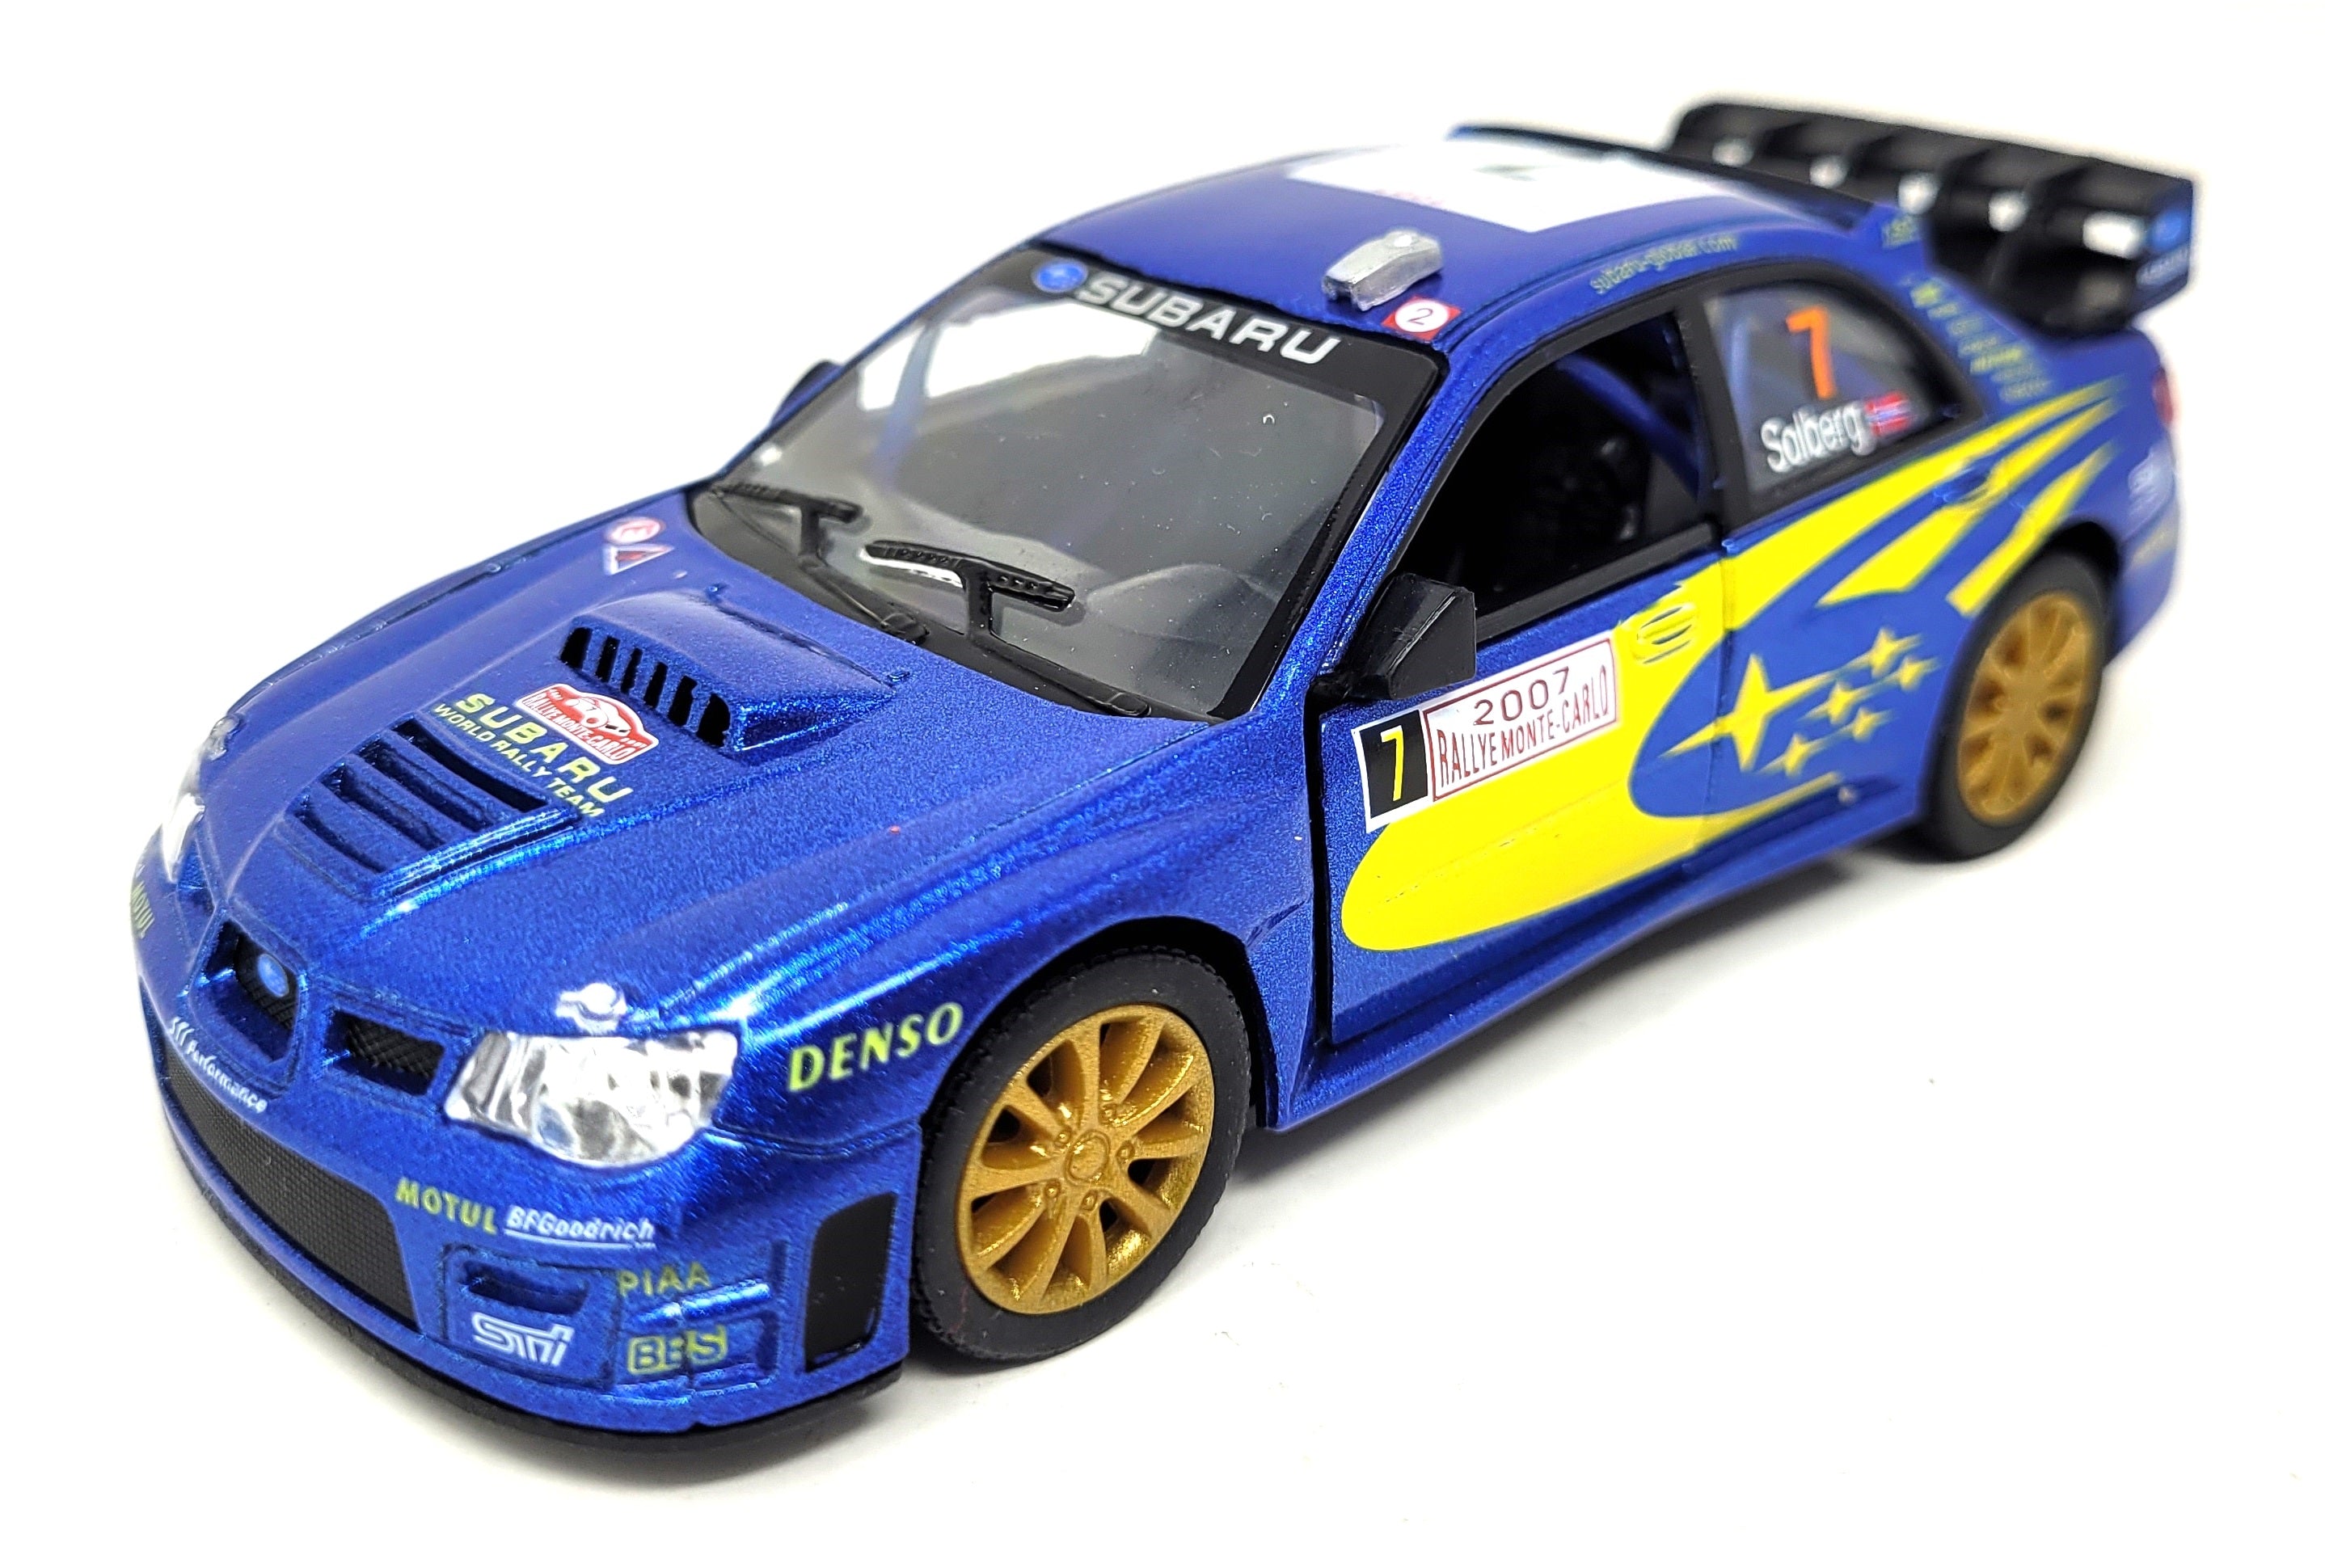 Kandytoys Pullback Subaru Impreza WRC 2007 Scale 1:36 Toy Car